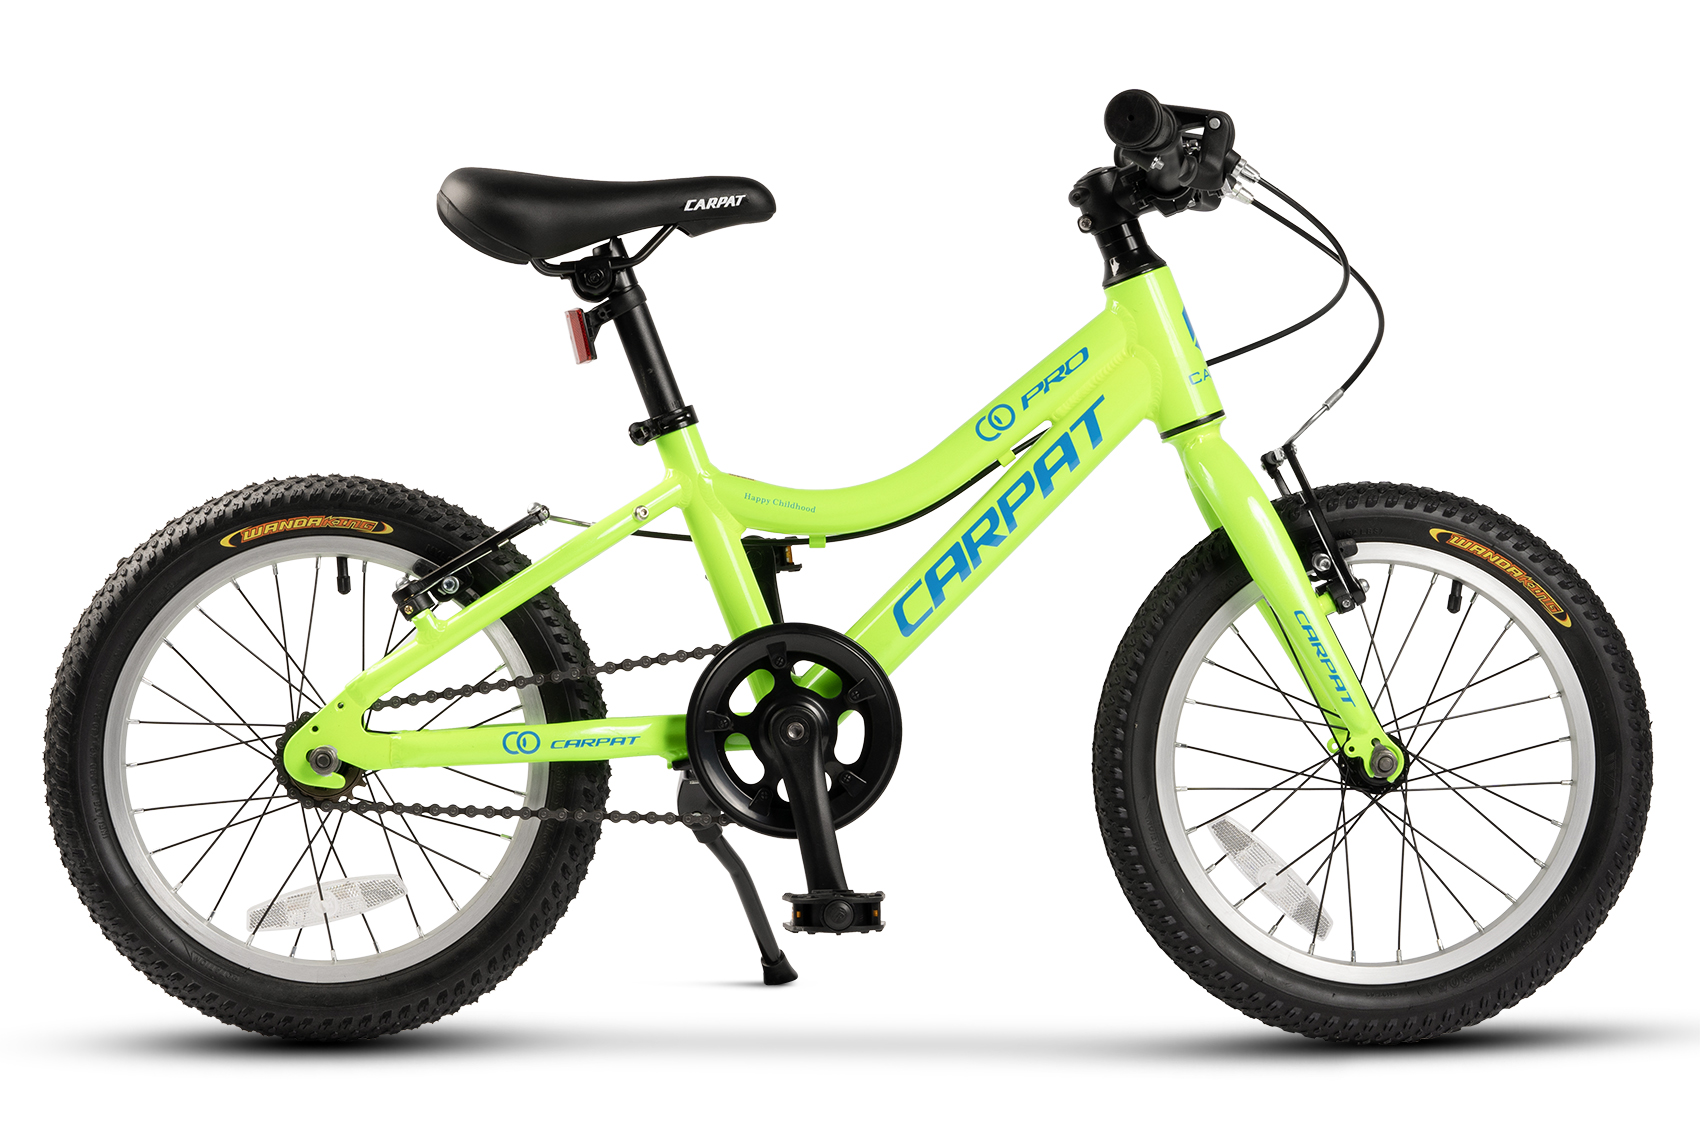 PROMO BICICLETE - ﻿﻿Bicicleta Copii 4-6 ani Carpat C16208C 16", Verde/Albastru, https:carpatsport.ro